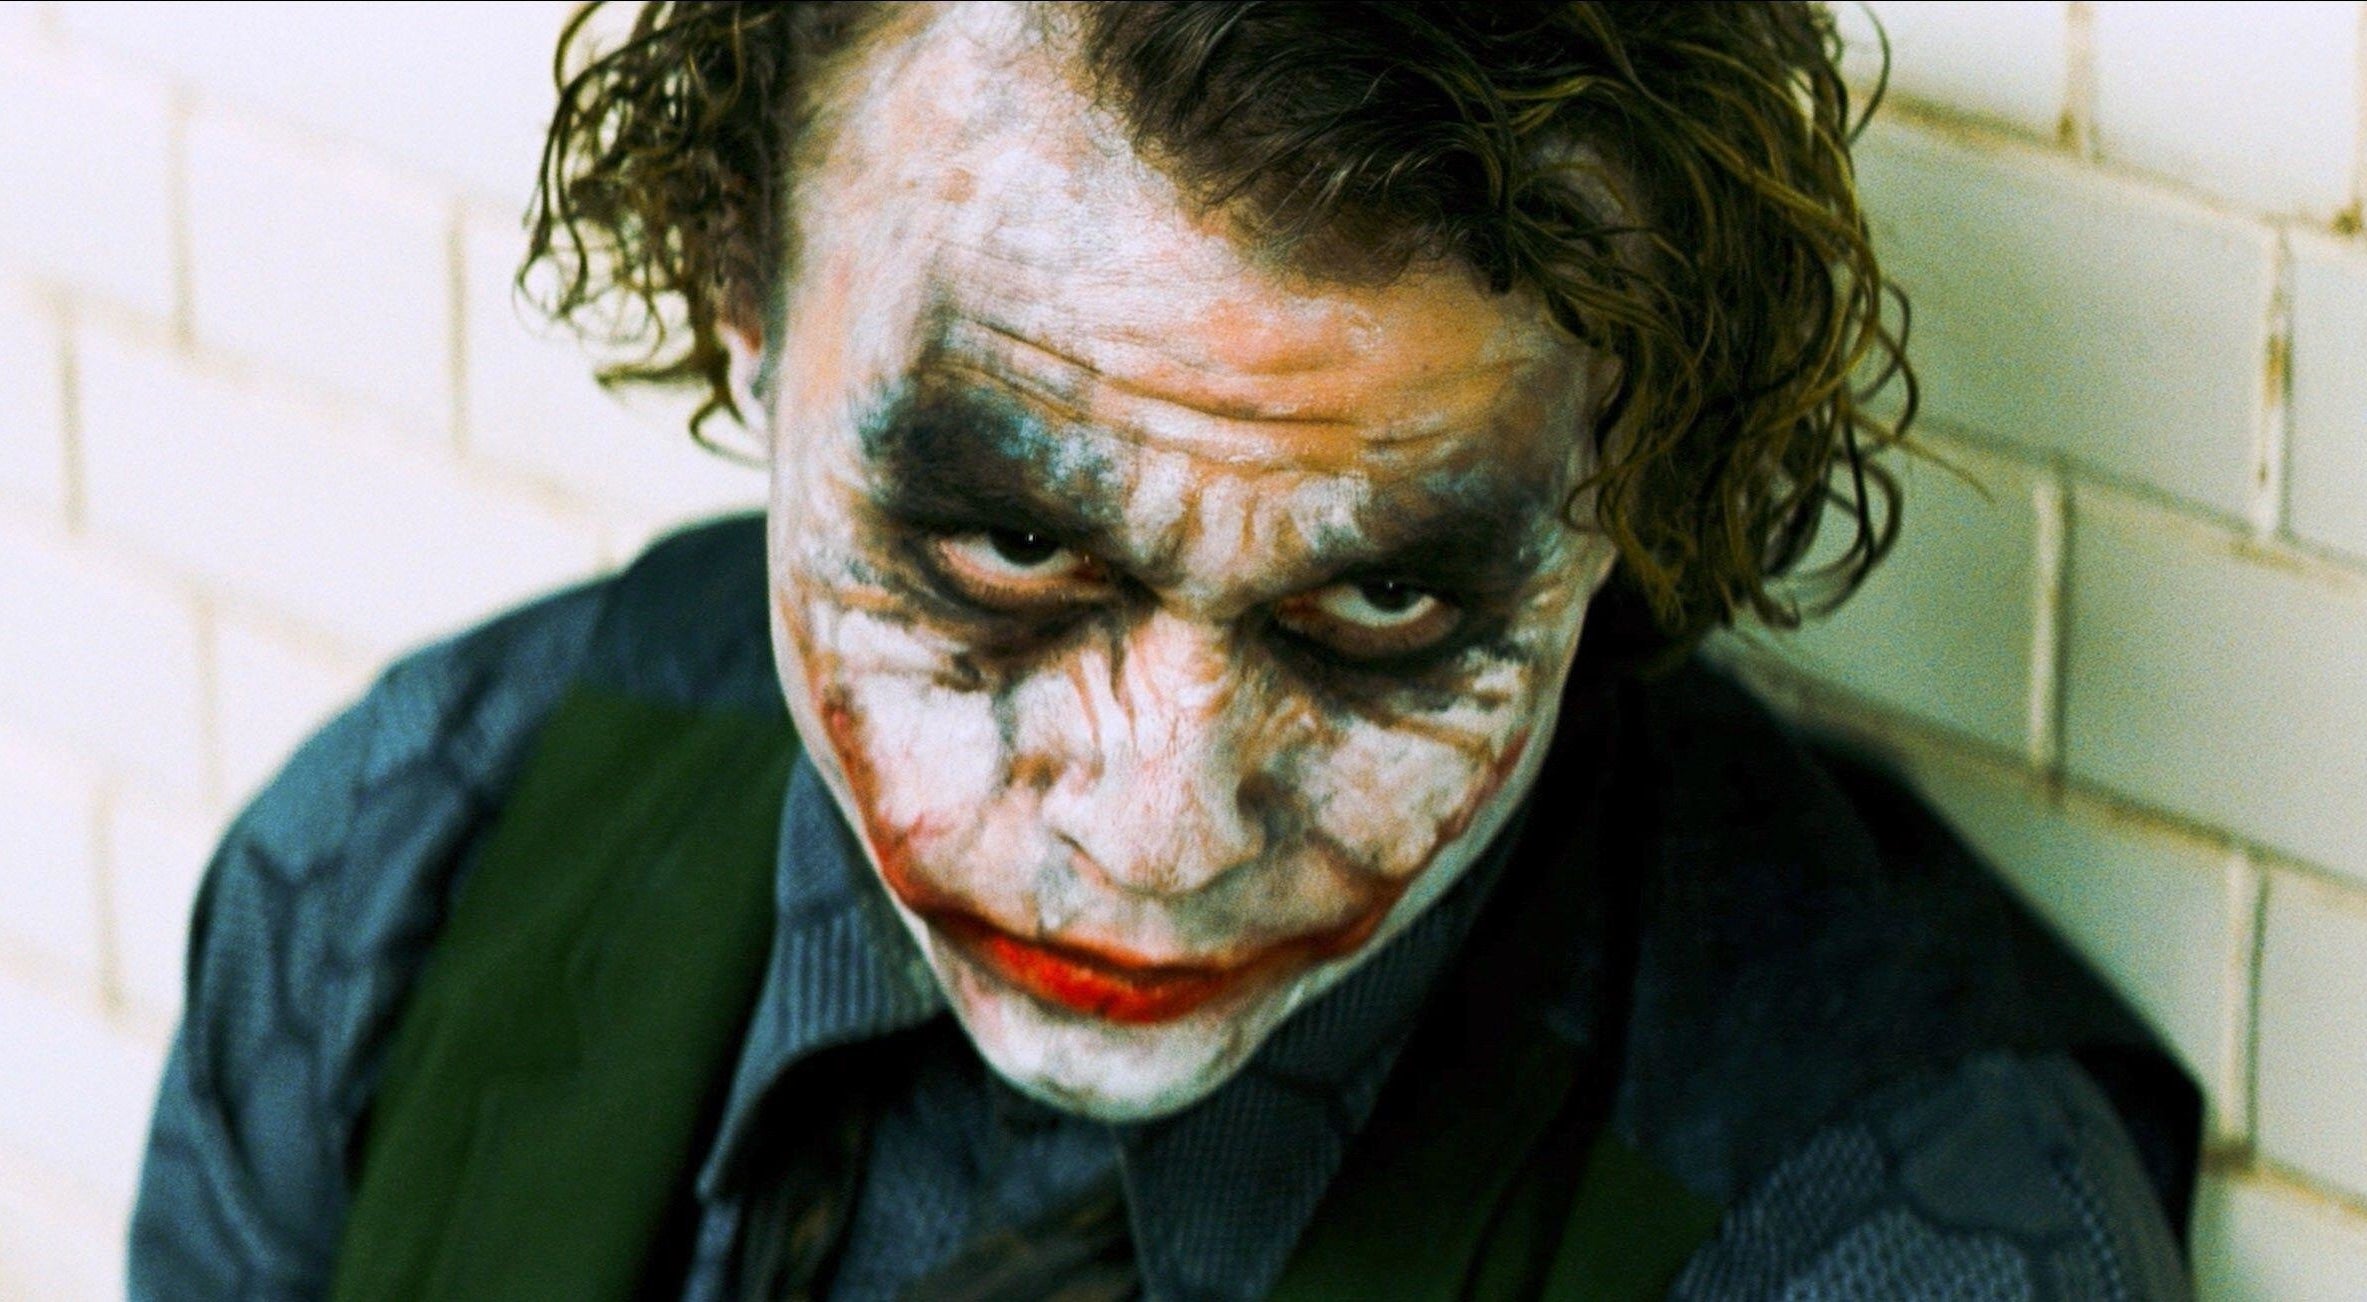 Close-up of Heath as the Joker